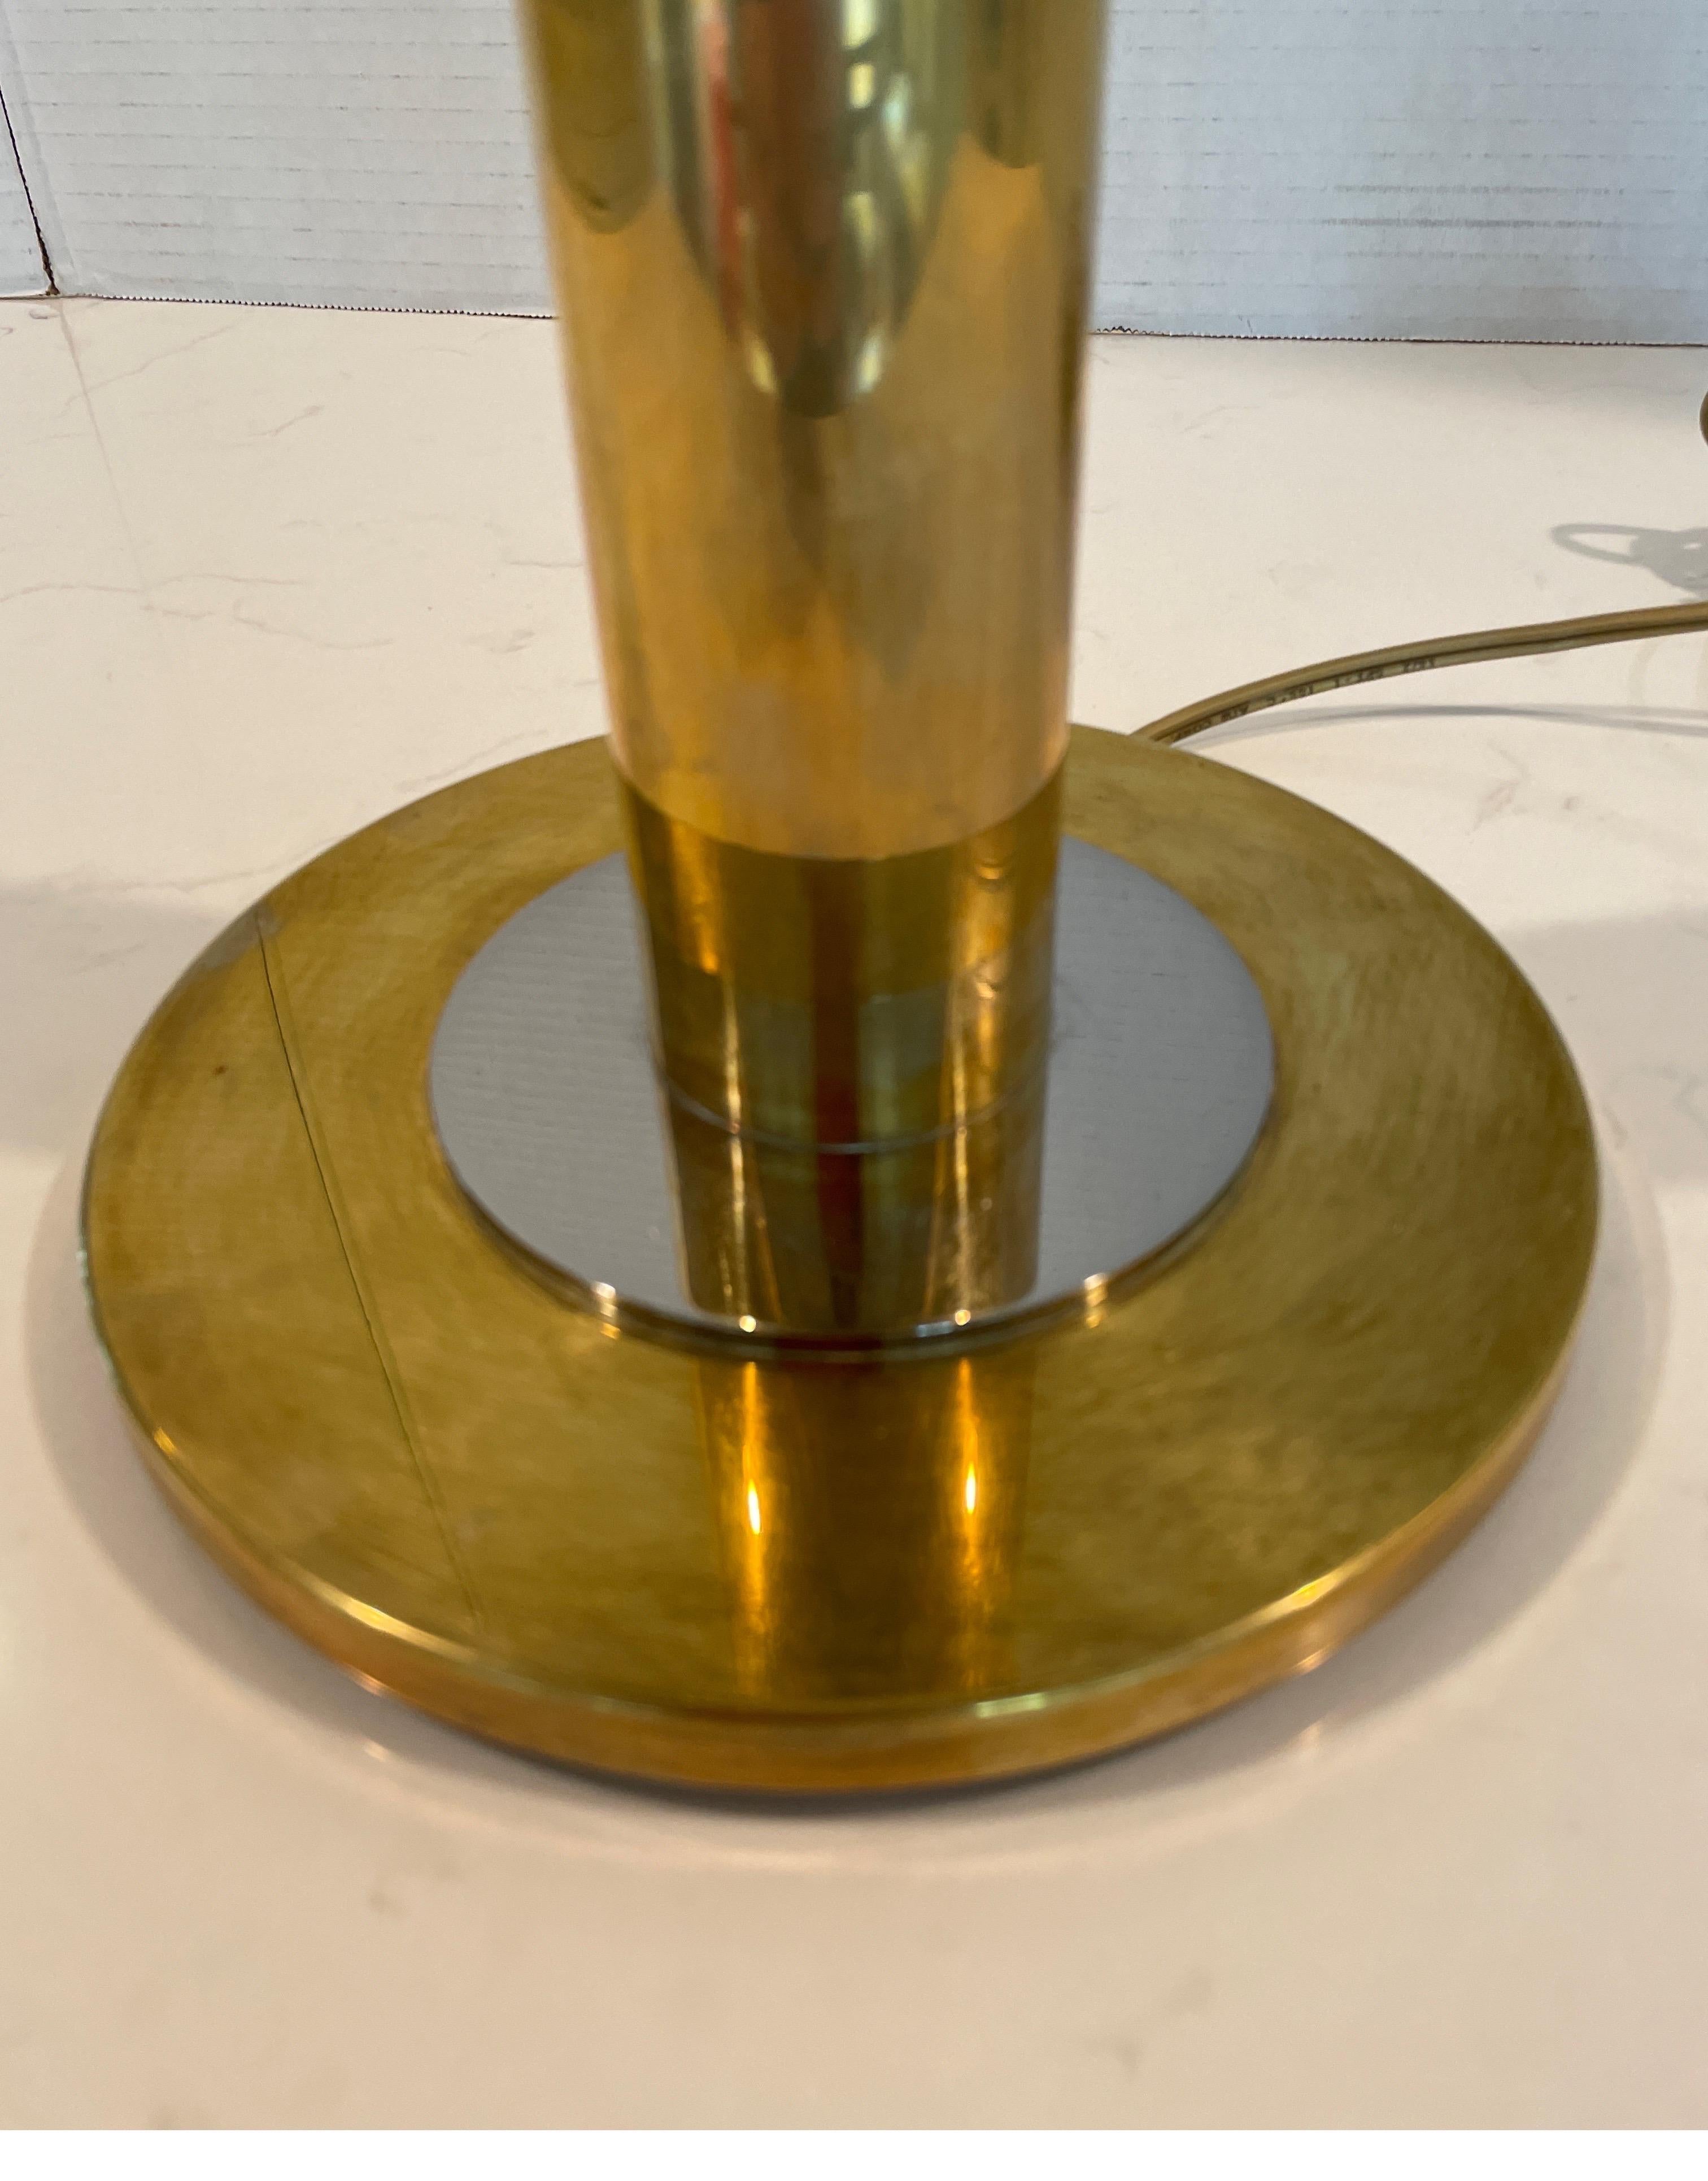 Nessen brass and chrome desk lamp.